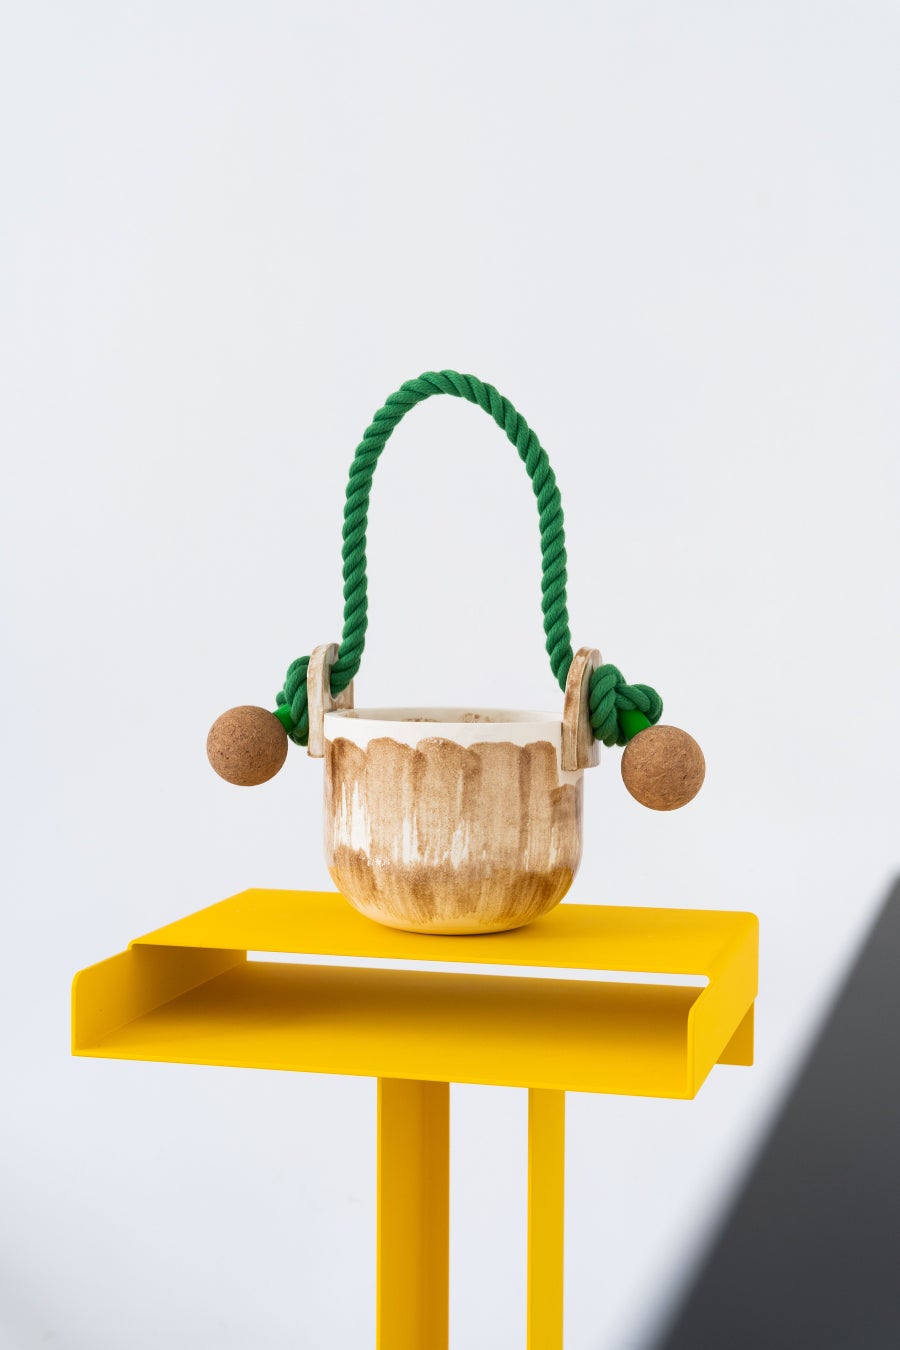 【CIBONE】「トシキ Toshiki 」こと、八木沢 俊樹による3D プリンティングを駆使した陶芸作品の展覧会をCIBONE CASE にて開催